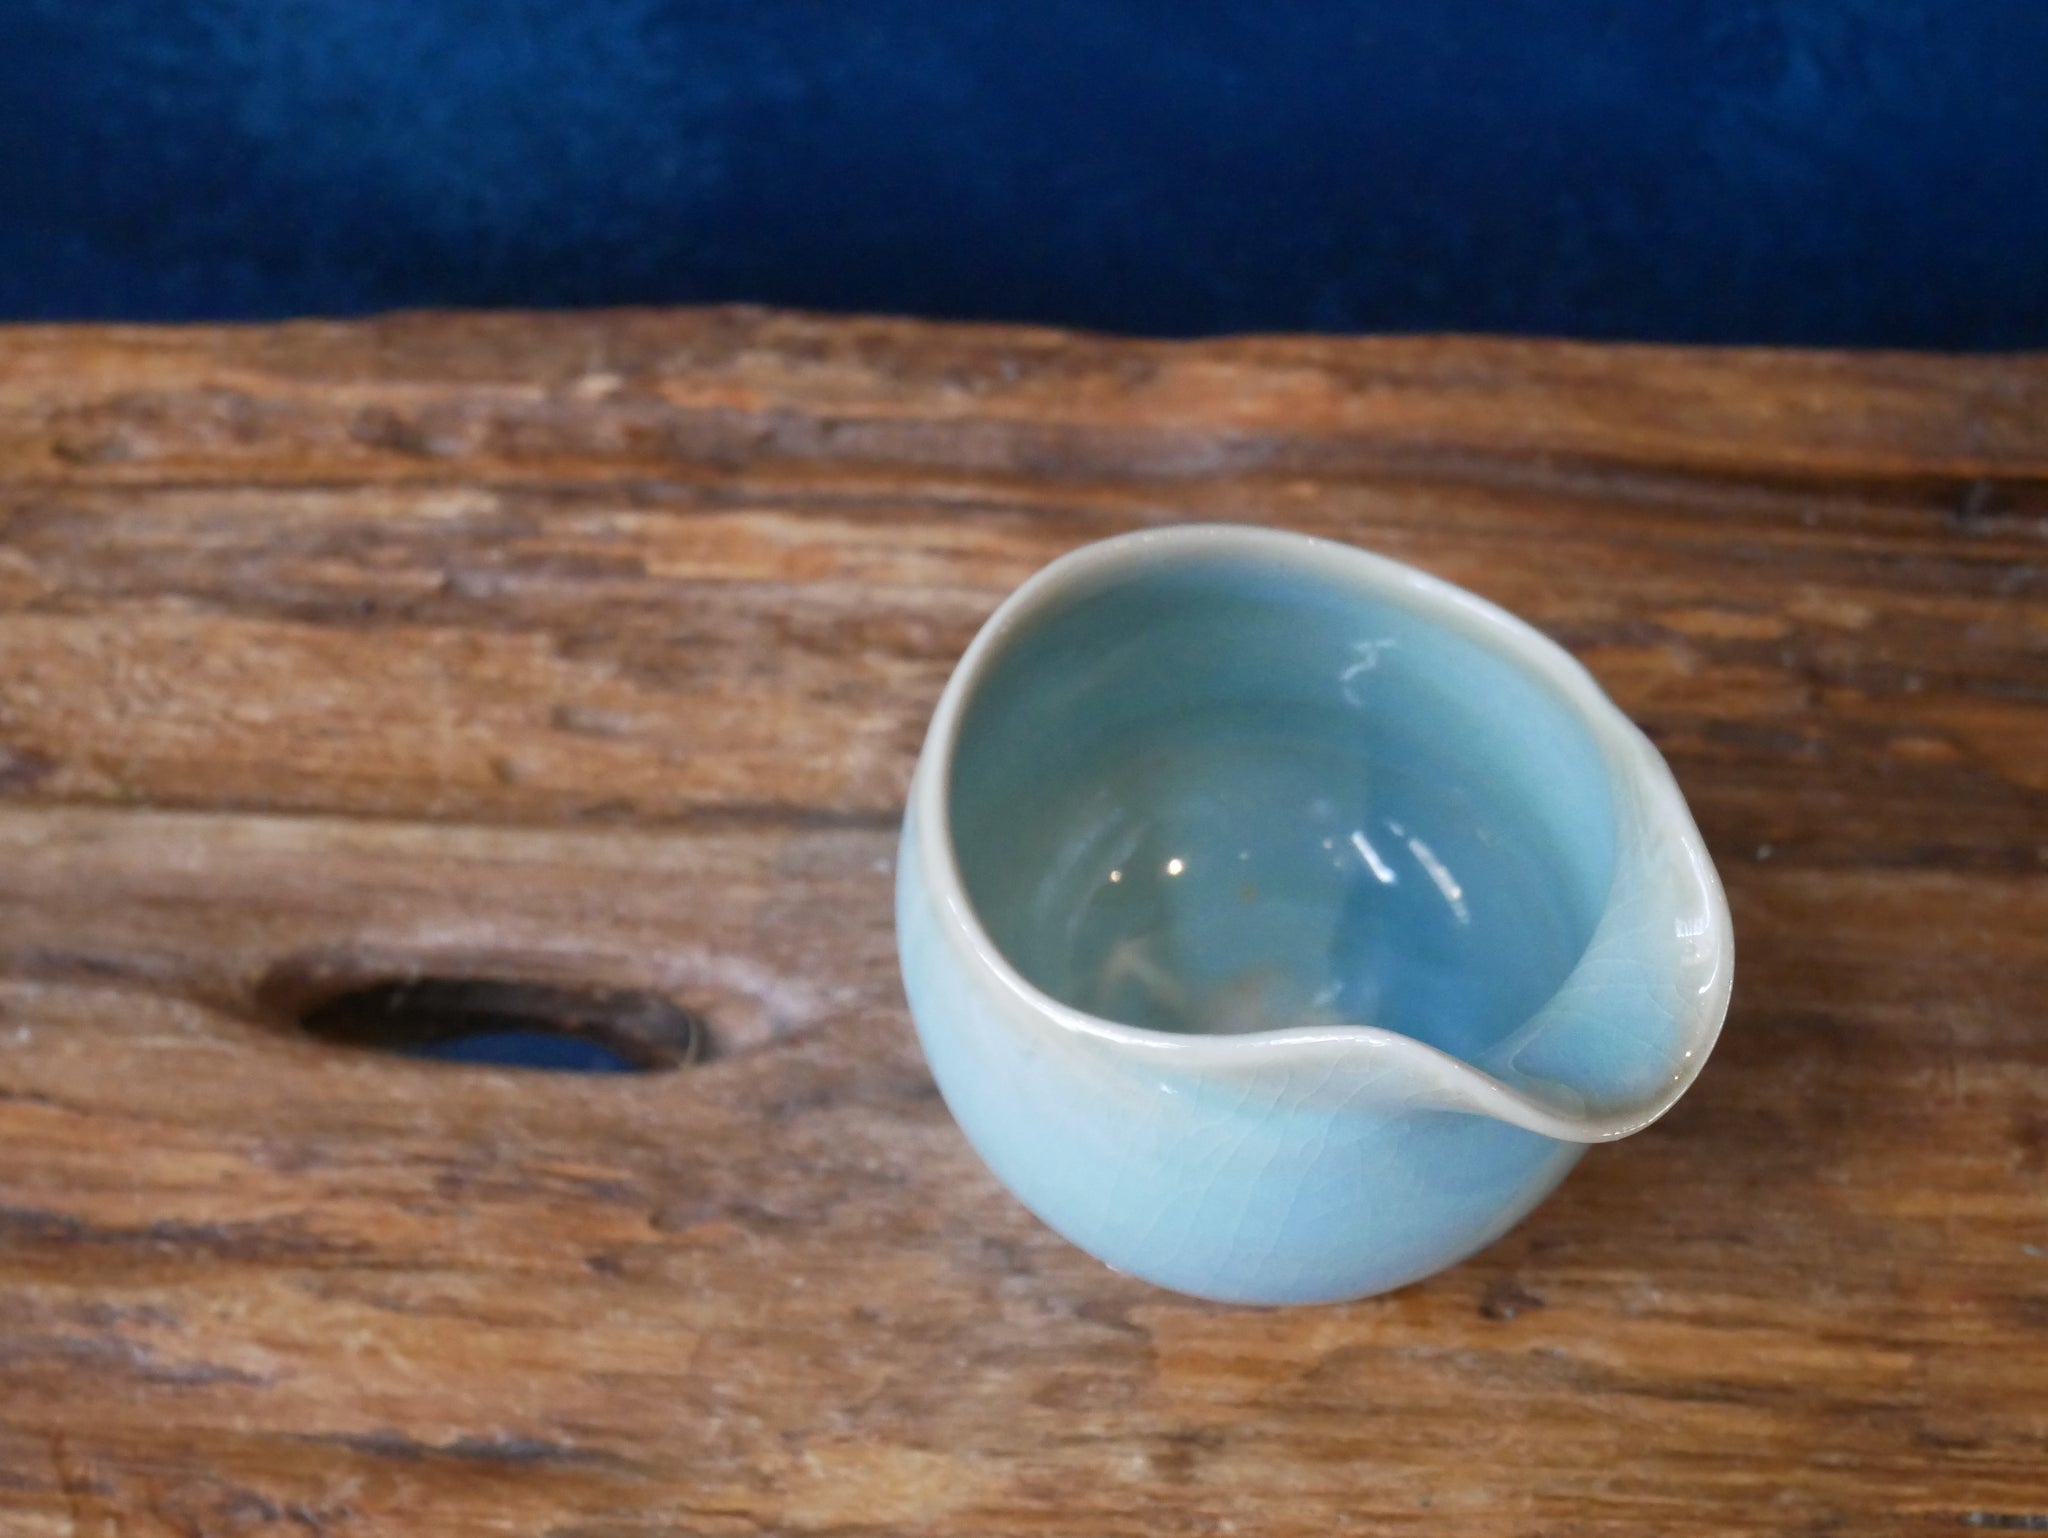 Blue celadon - Milk jug